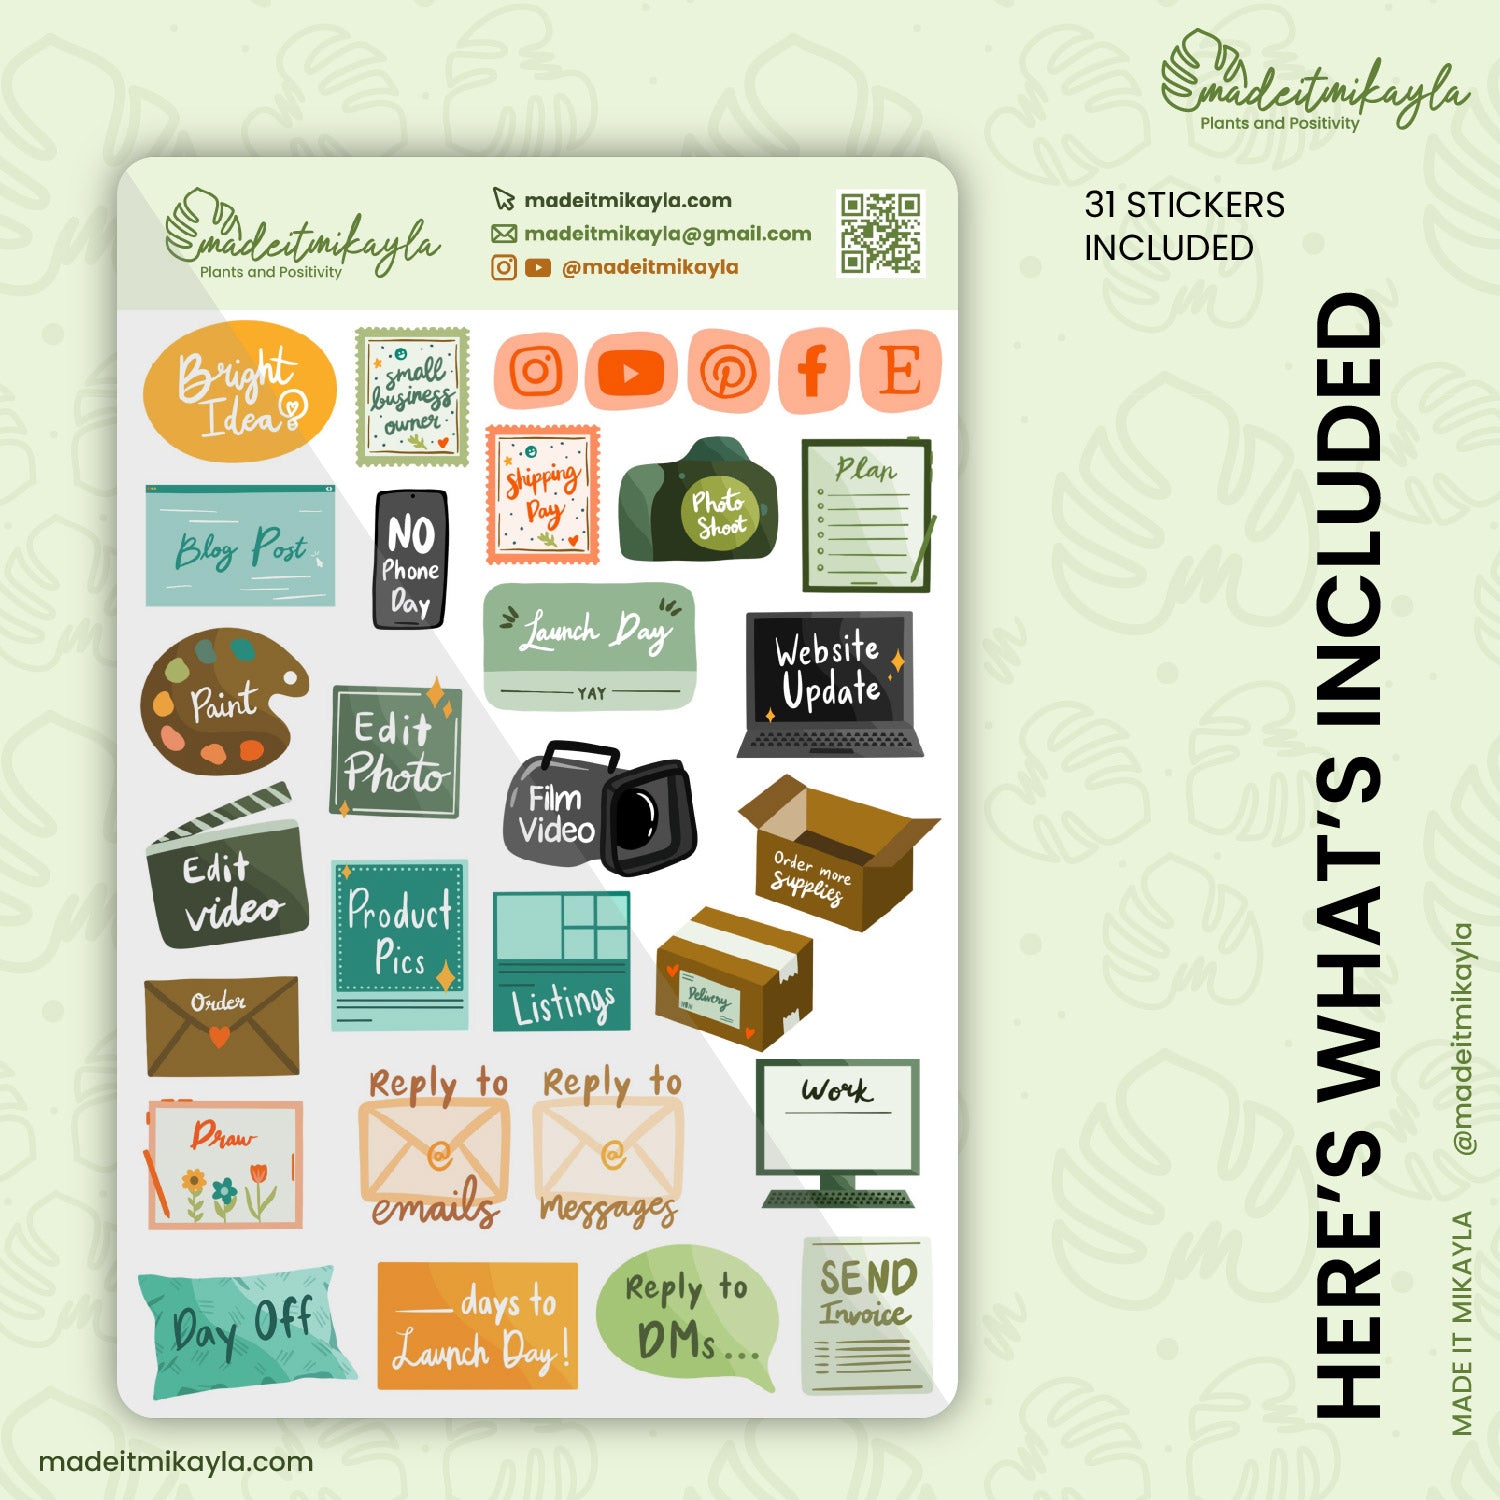 Everyday Small Business Digital Stickers | MadeItMikayla